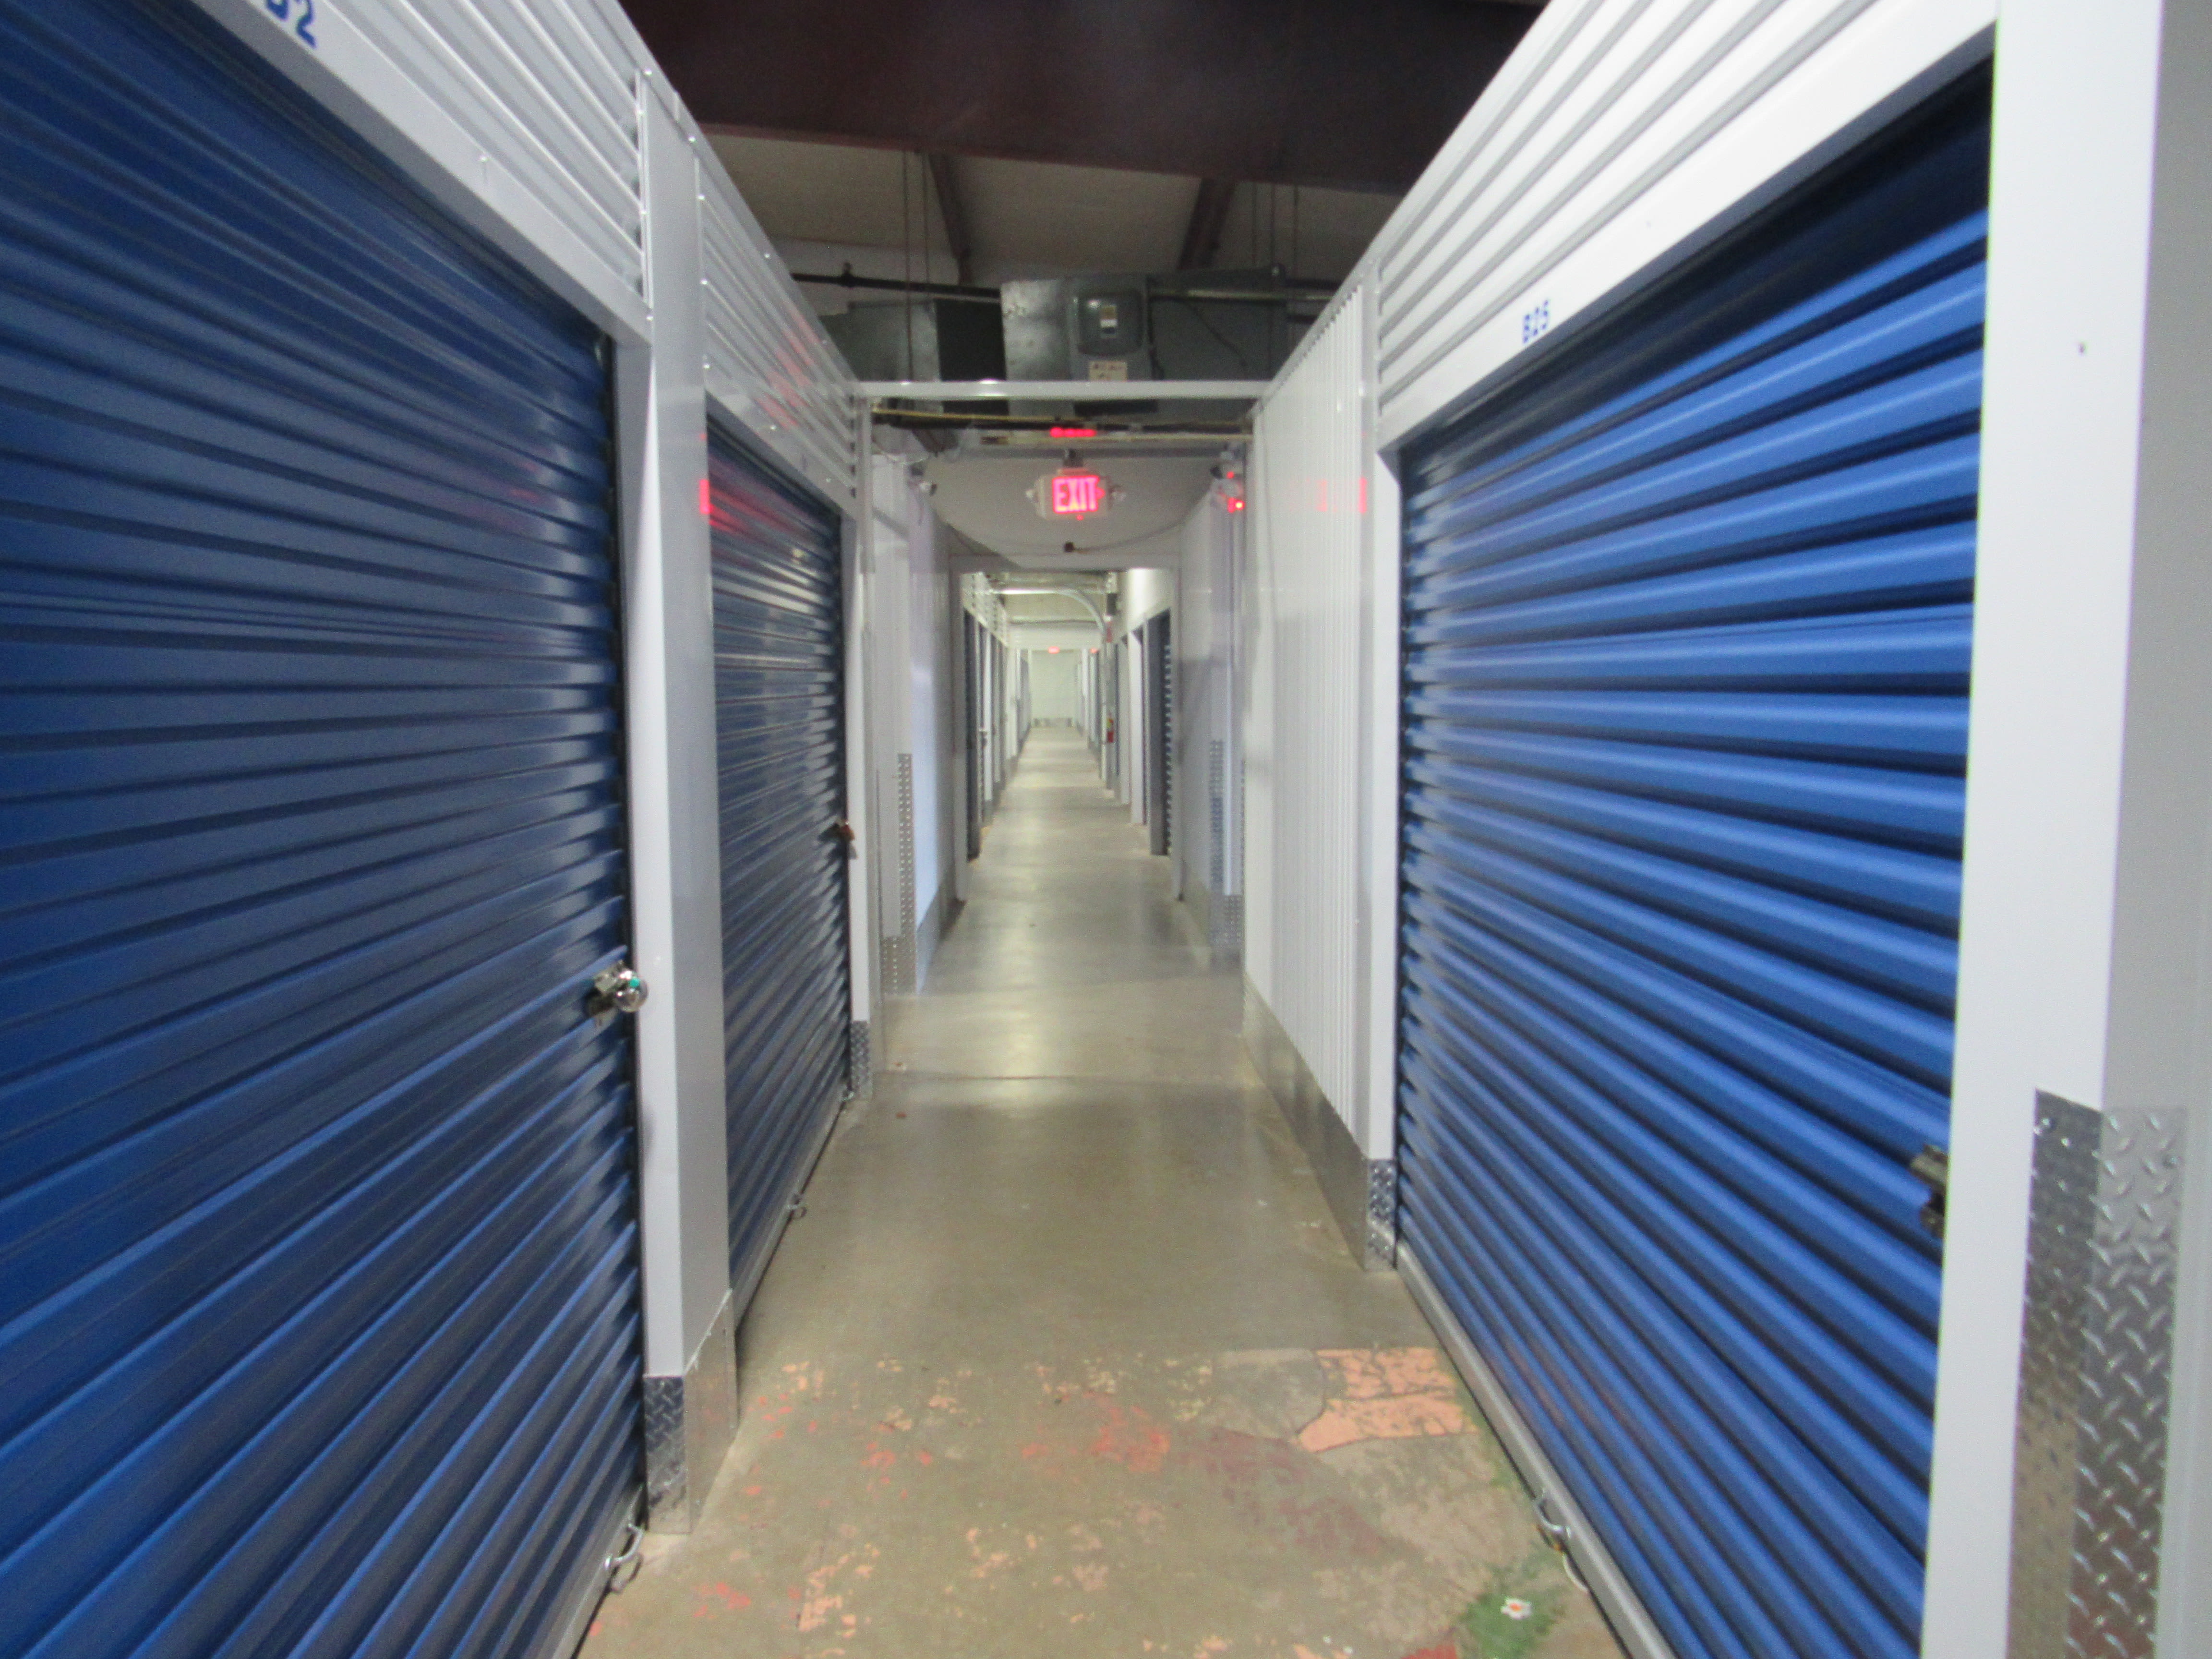 Storage units with blue doors and locks at KO Storage in Ozark, Missouri